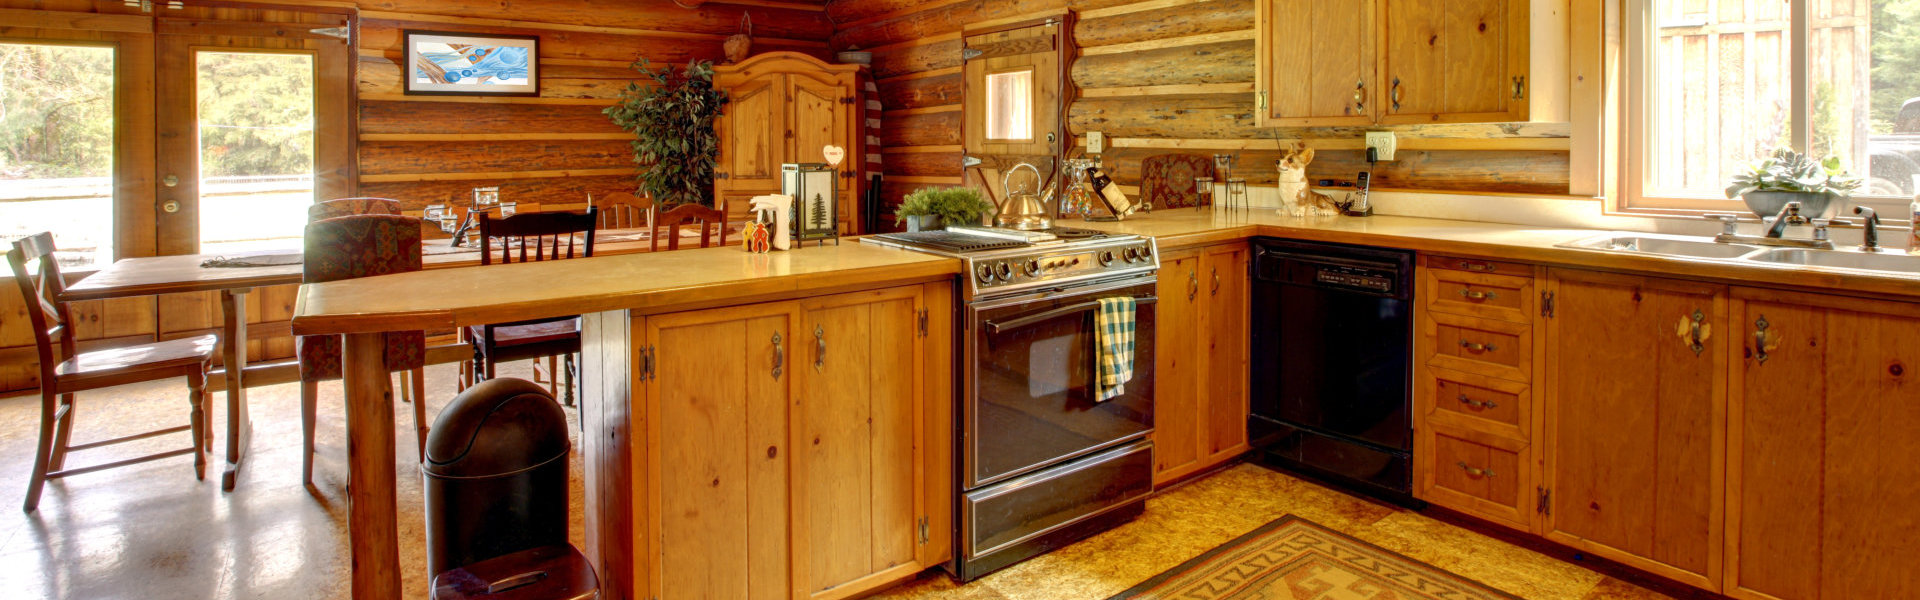 Wood cabin rustic kitchen interior.